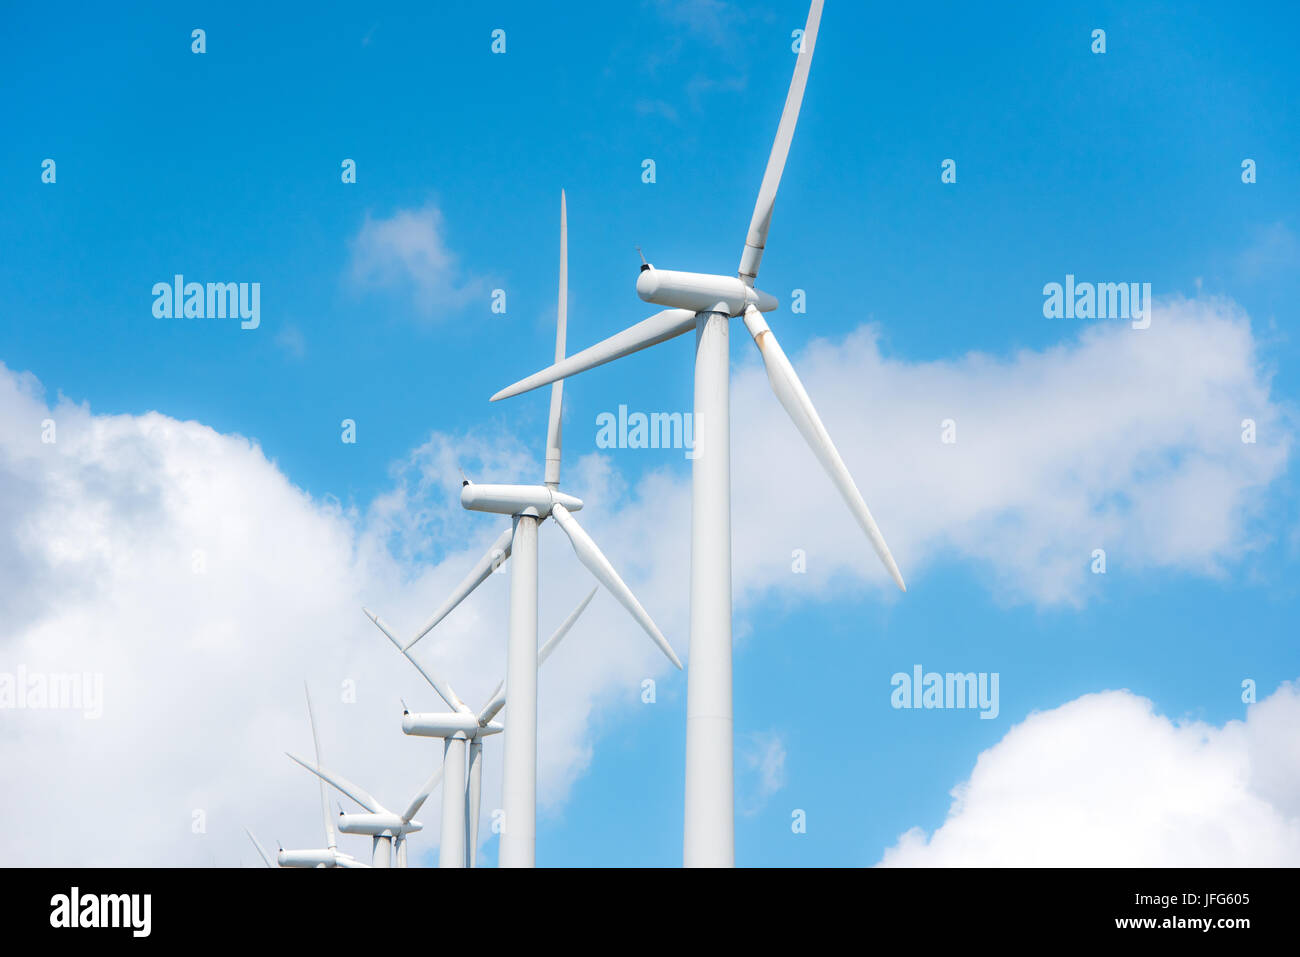 Wind turbines in wind power plant Stock Photo